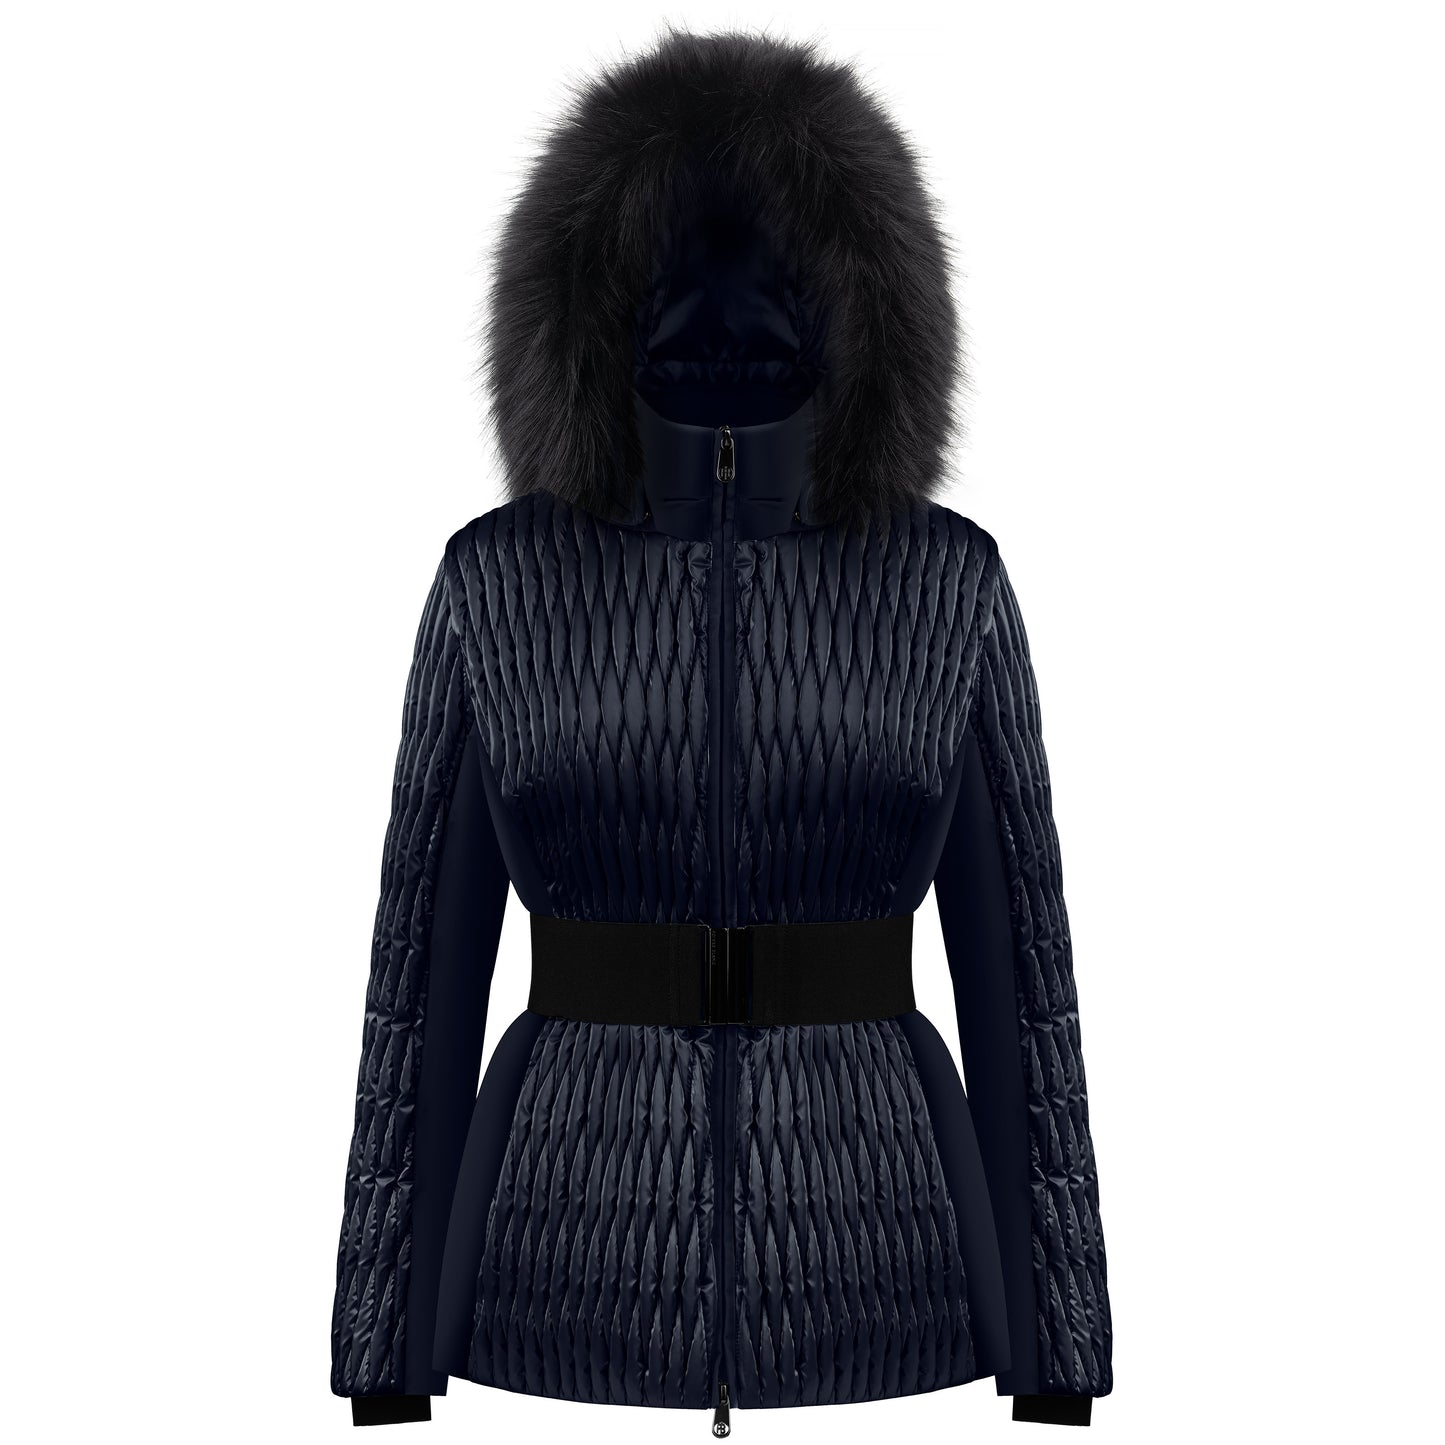 Poivre Blanc Lauren Insulated Ski Jacket with Faux Fur (Women's)